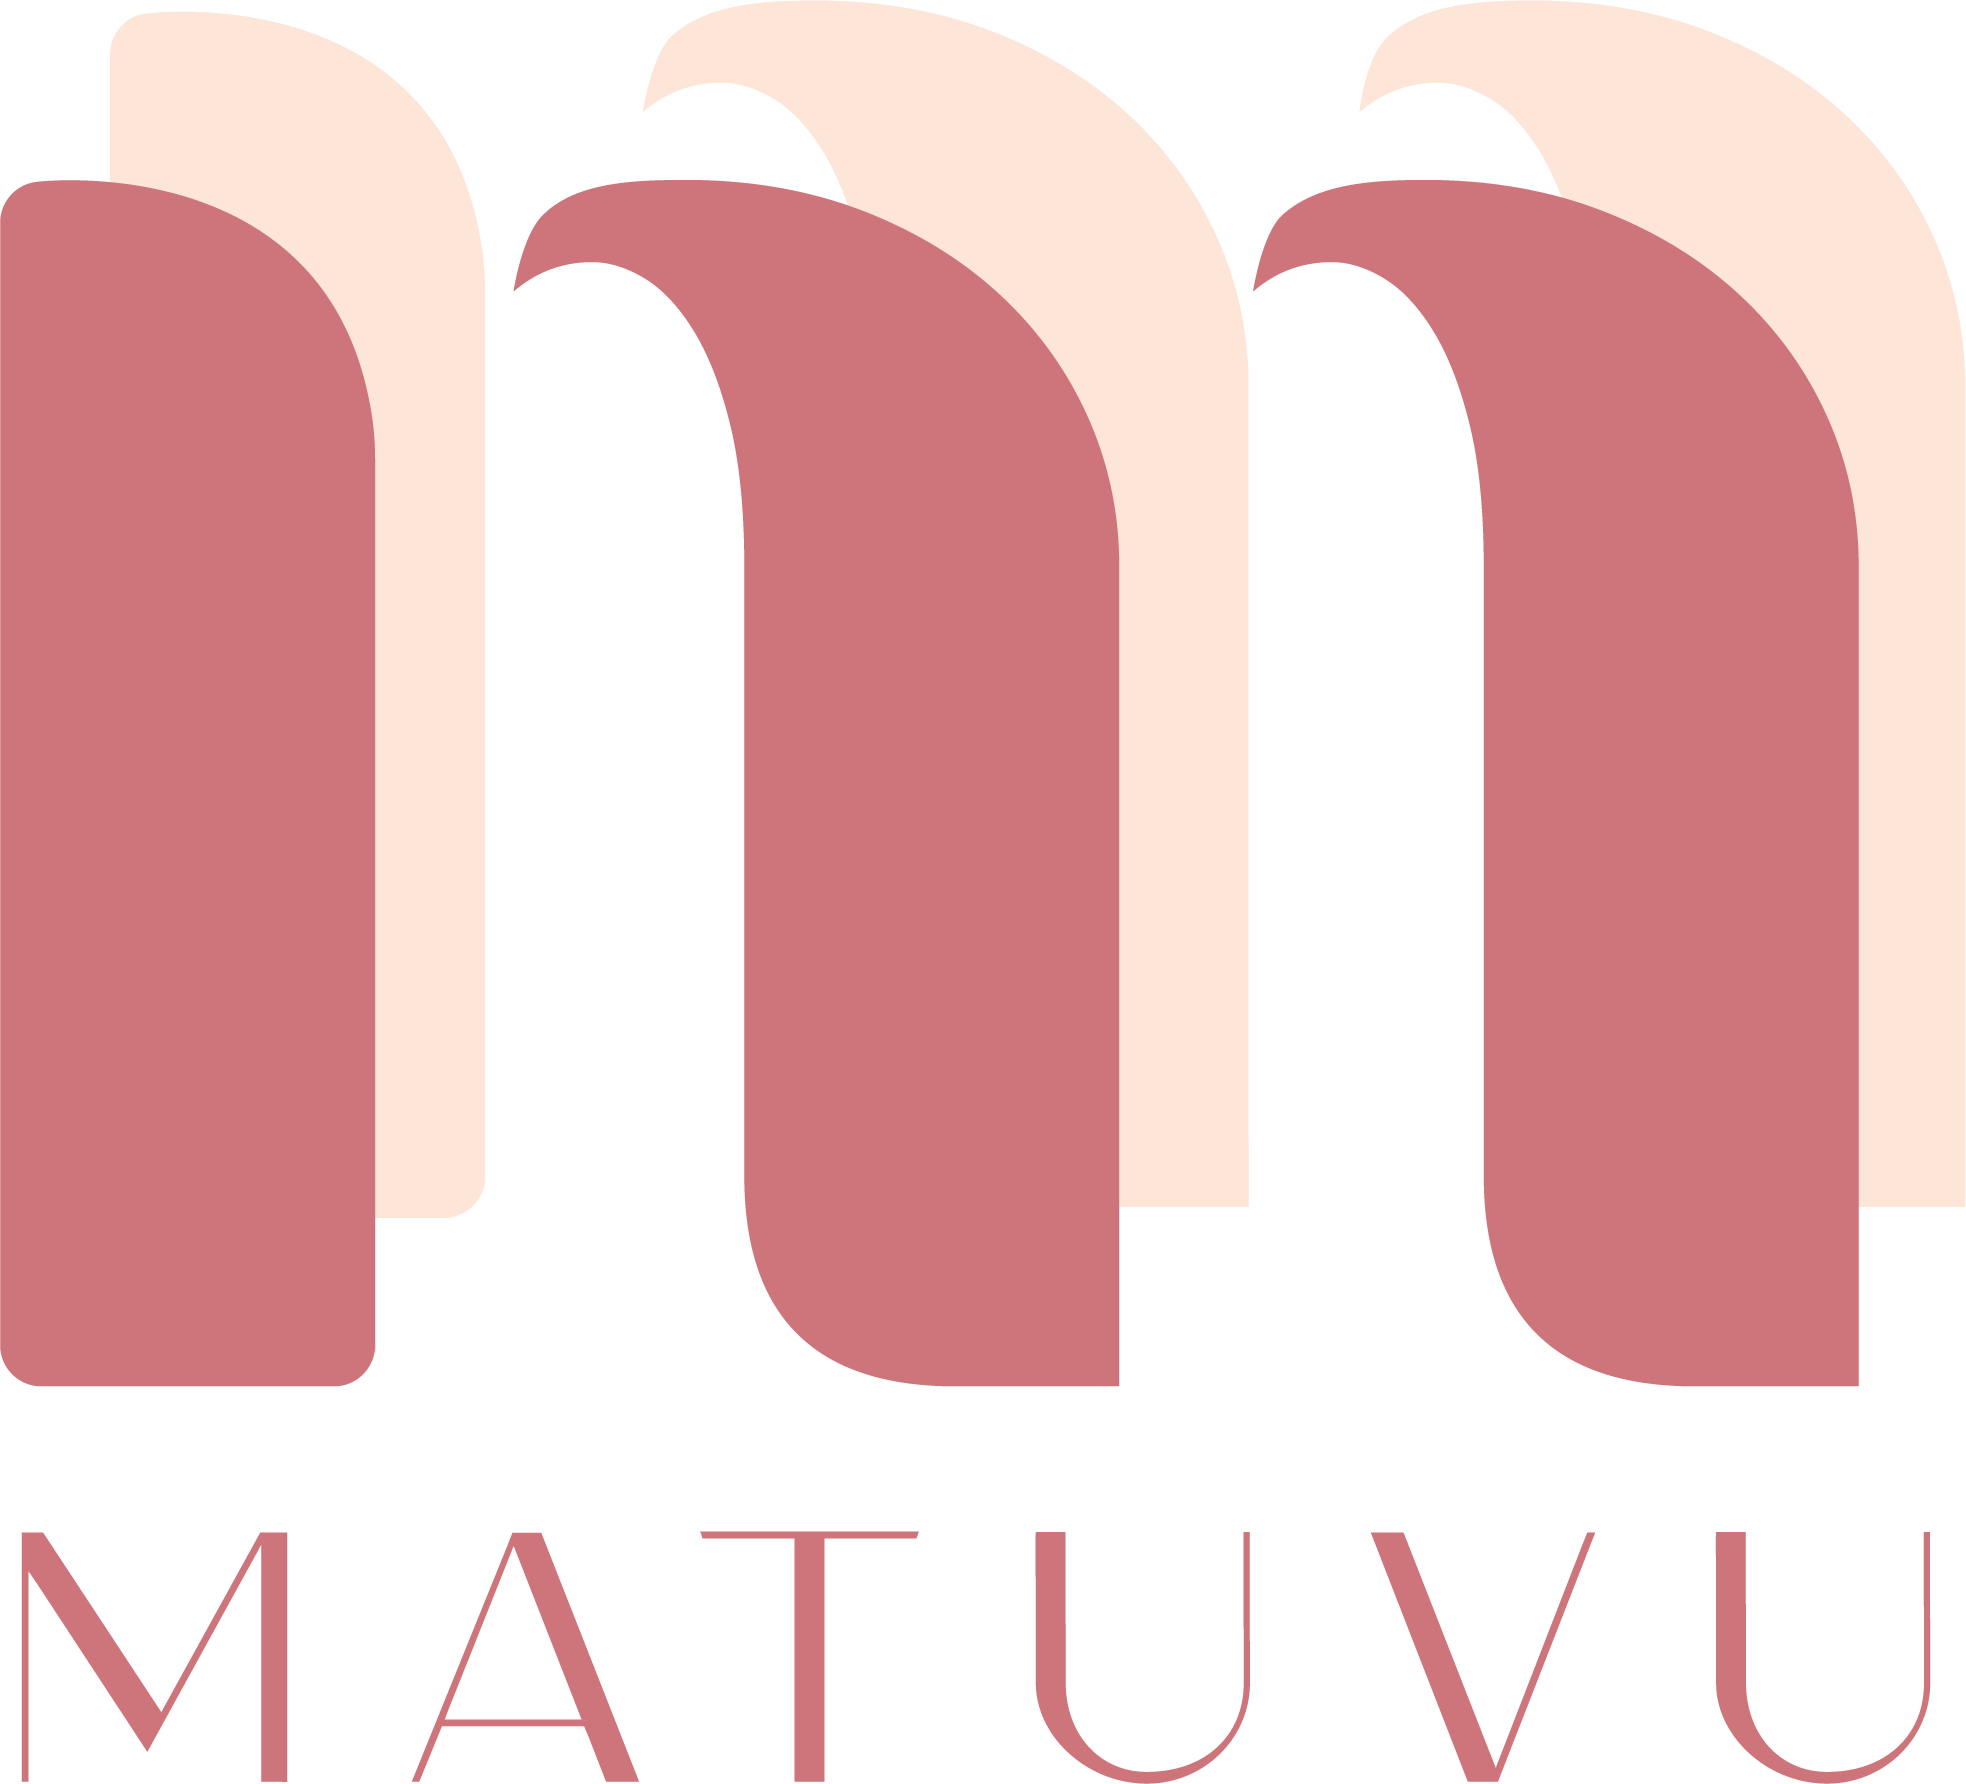 MATUVU AGENCY